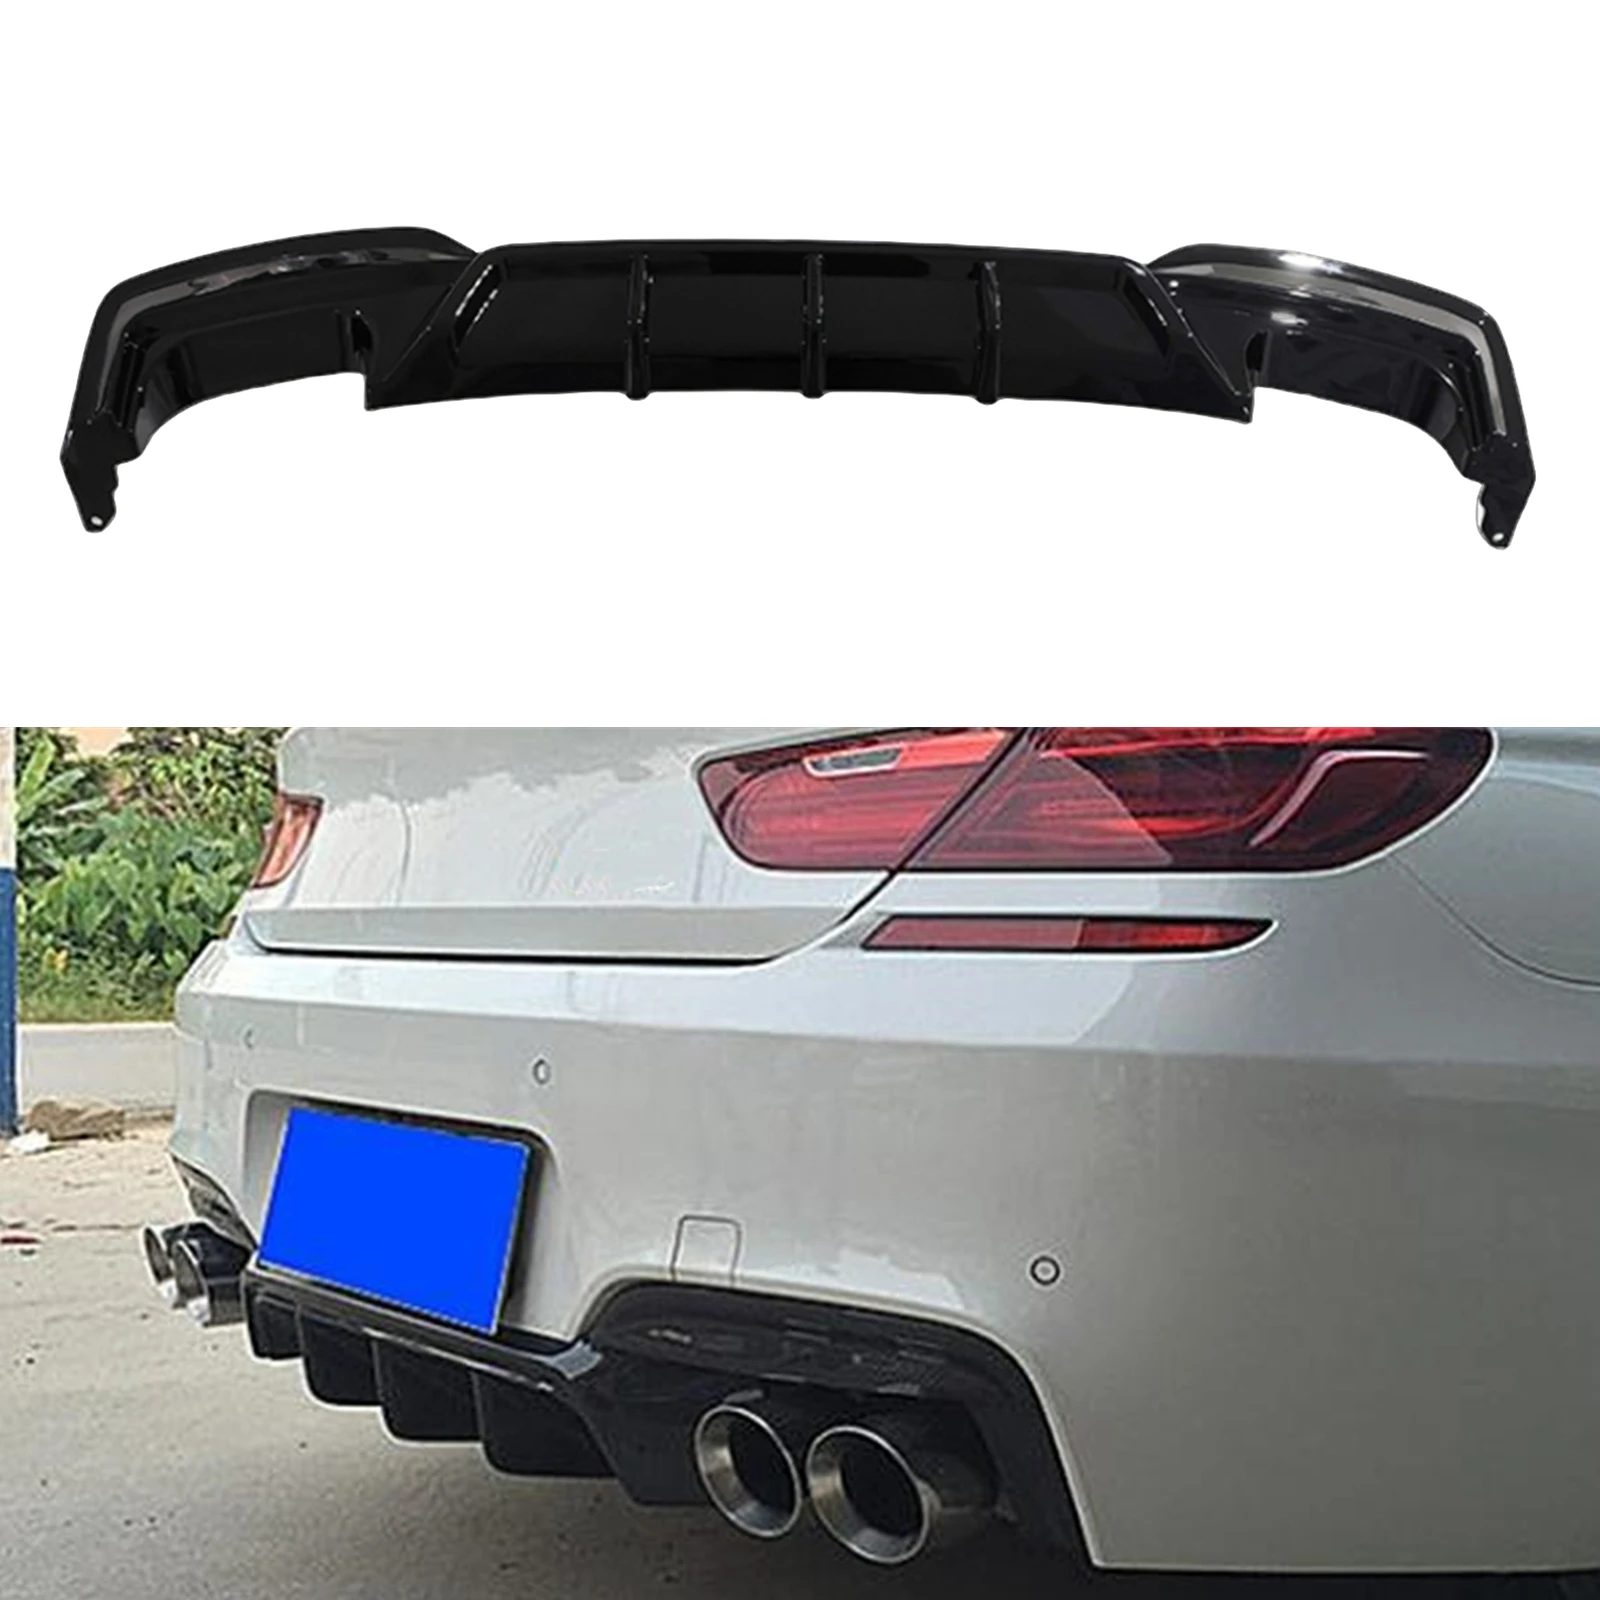 

For BMW F06 F12 F13 M Sport M6 2012-2016 Rear Bumper Diffuser Lip Gloss Black Tail Boot Spoiler Plate Body Splitter Protector